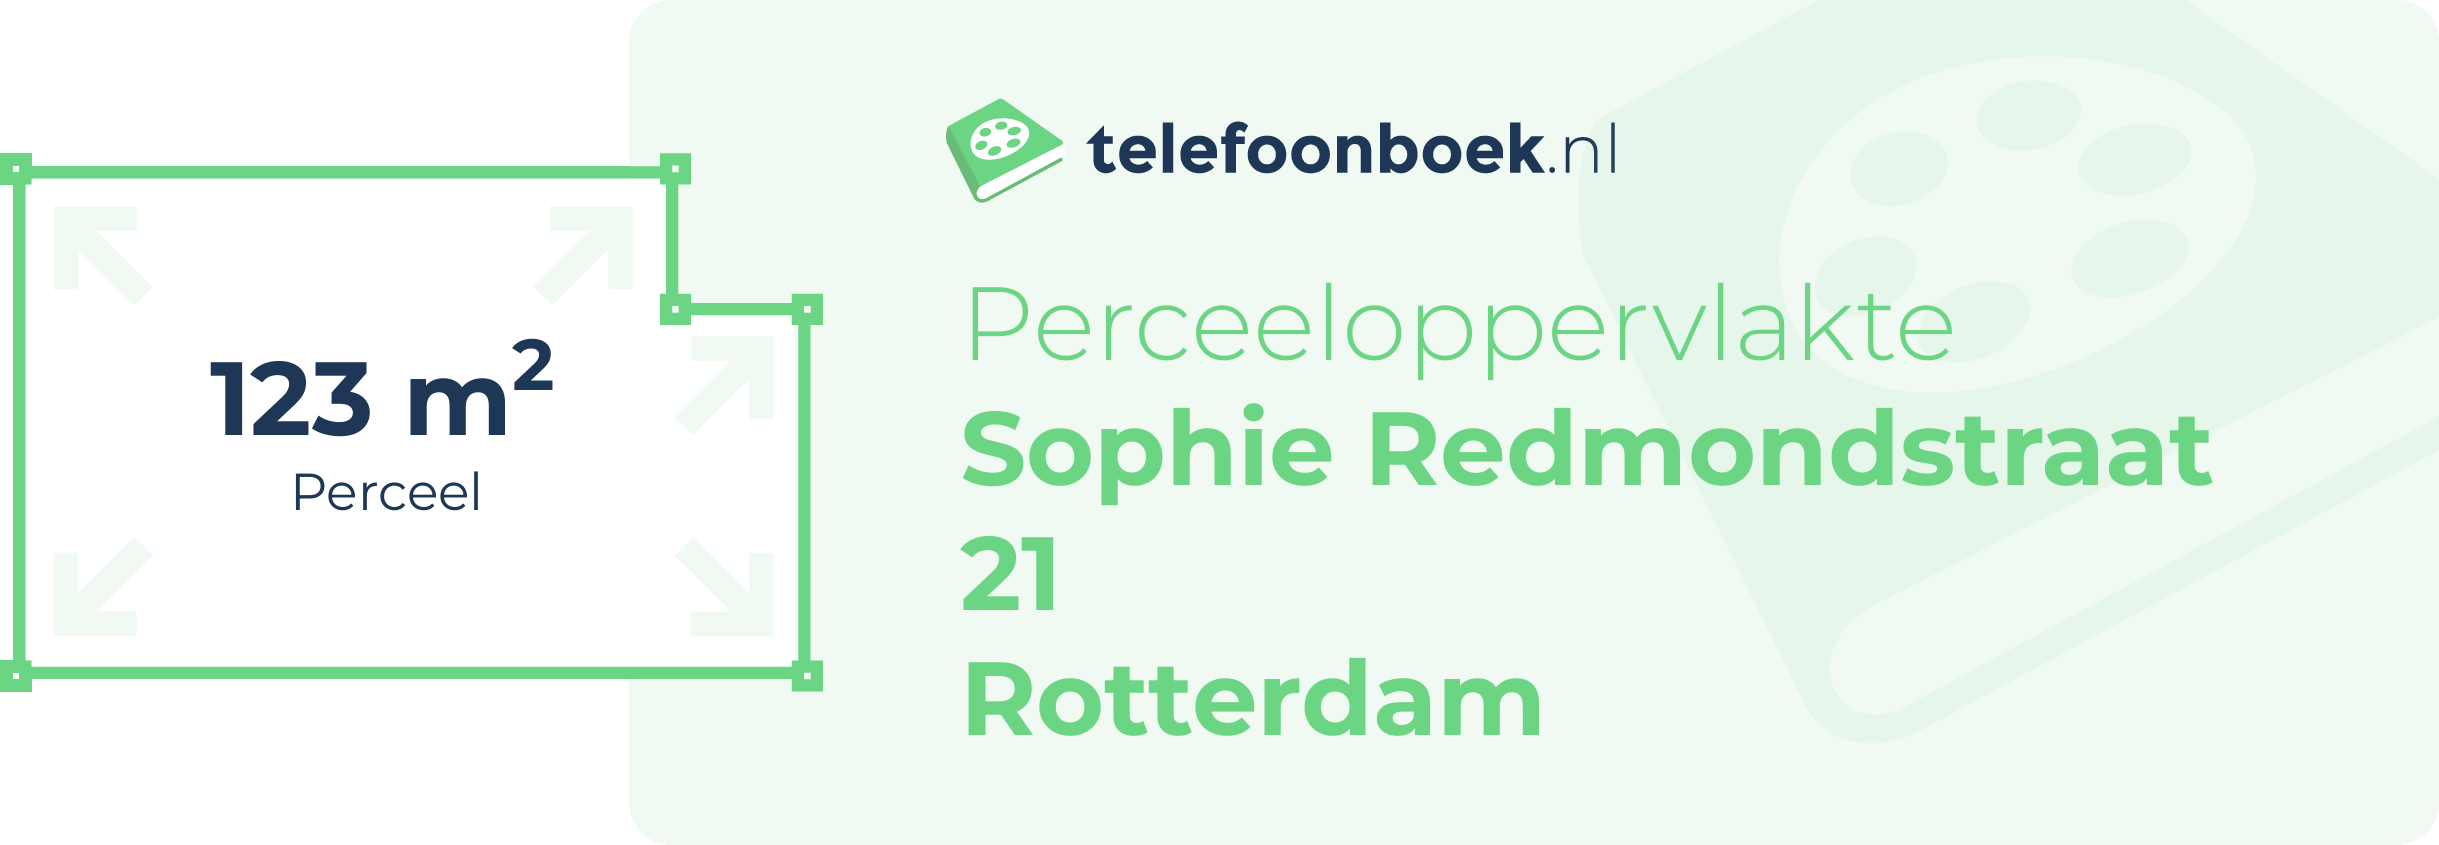 Perceeloppervlakte Sophie Redmondstraat 21 Rotterdam